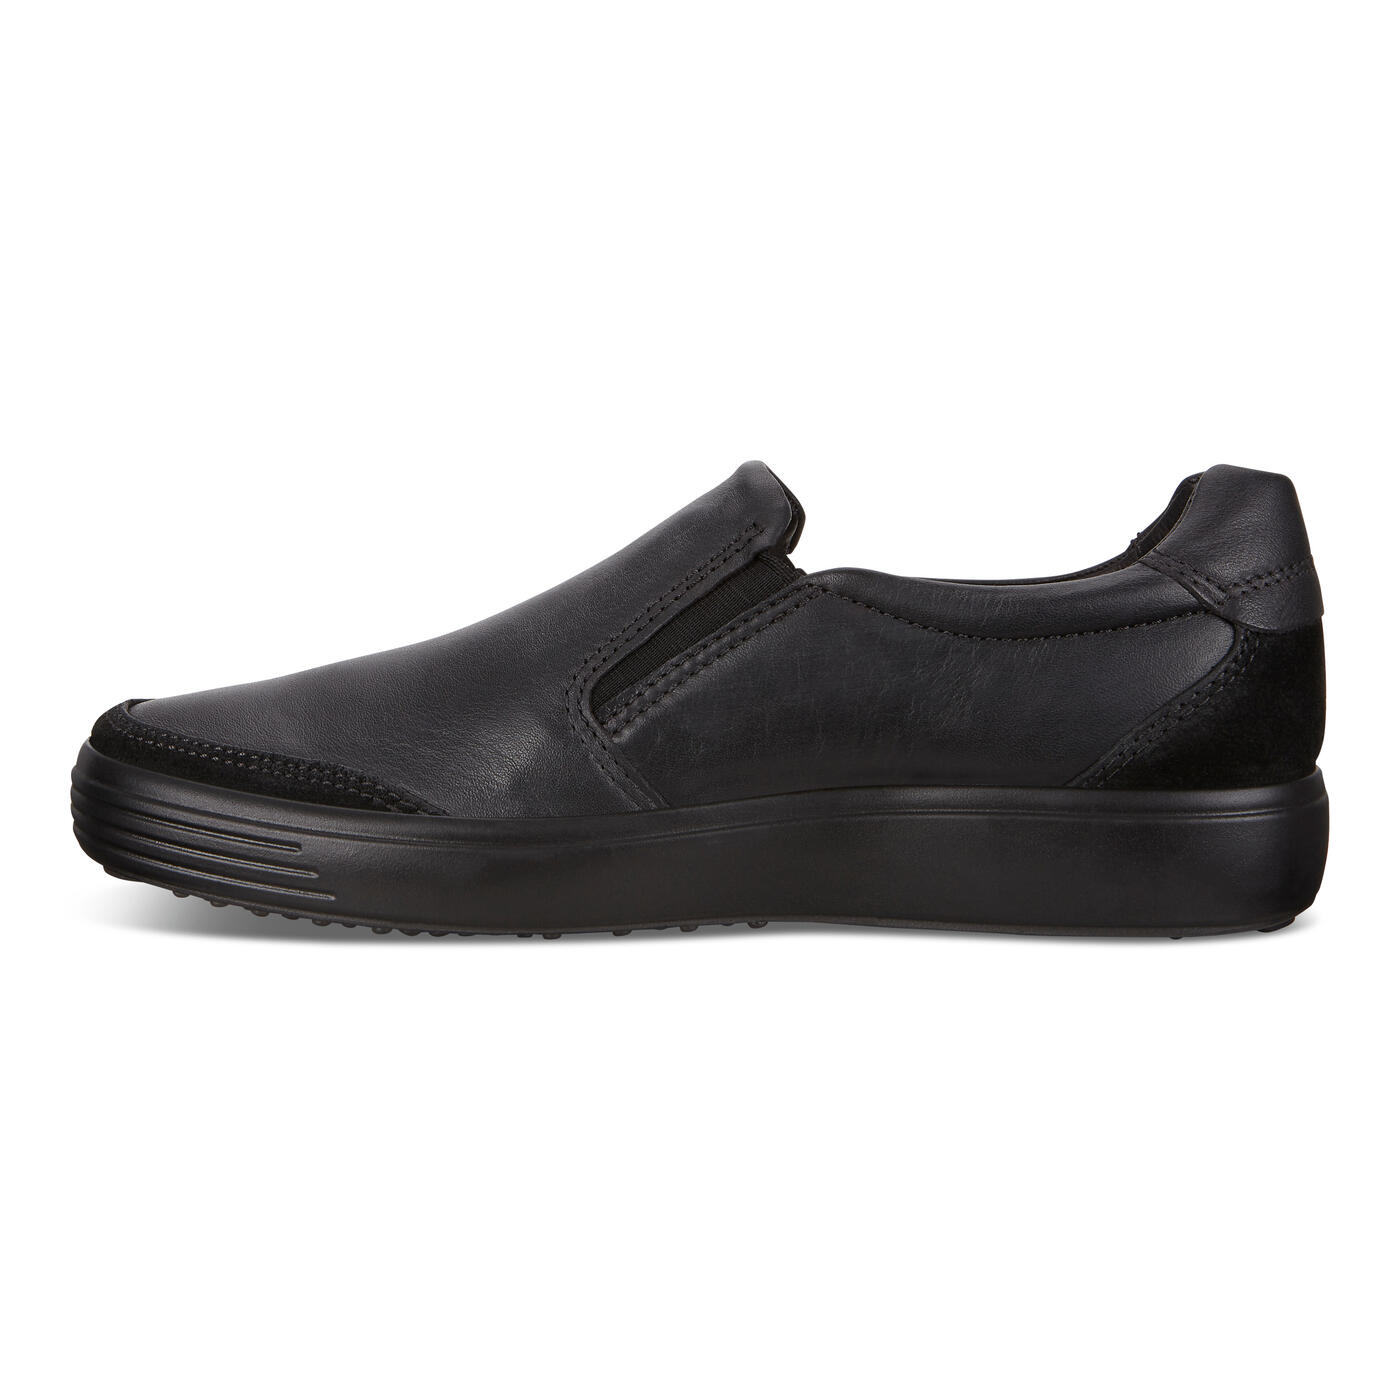 ECCO SOFT 7 MEN'S SLIP-ON | Official ECCO® Shoes